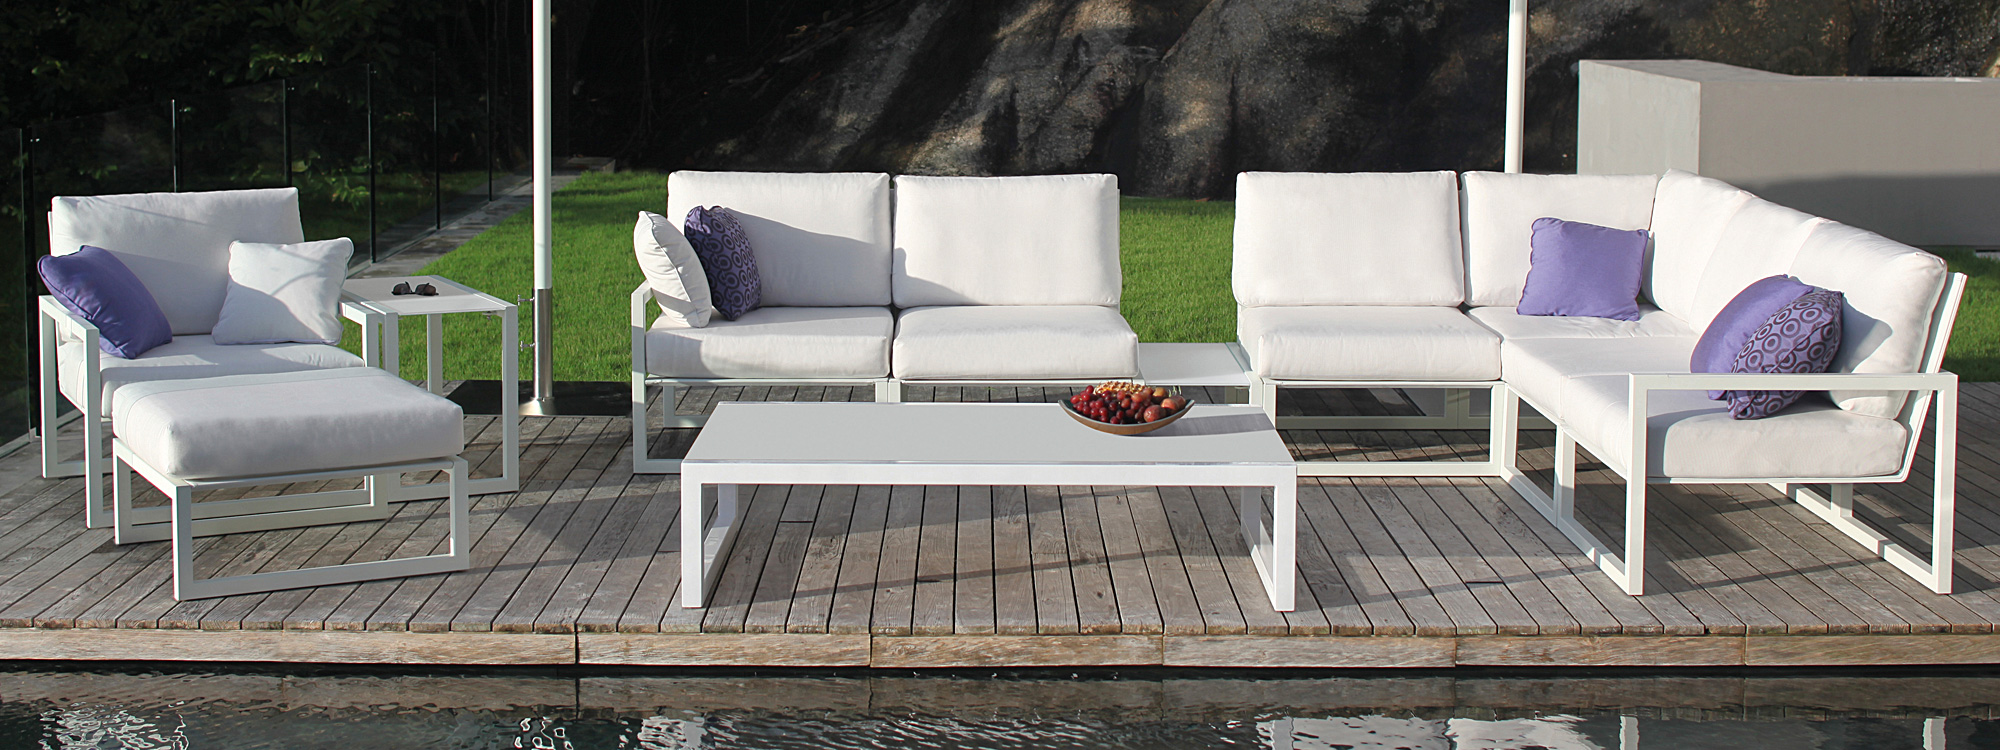 Royal-Botania-luxury-white-garden-low-seating-all-weather-cushions.jpg